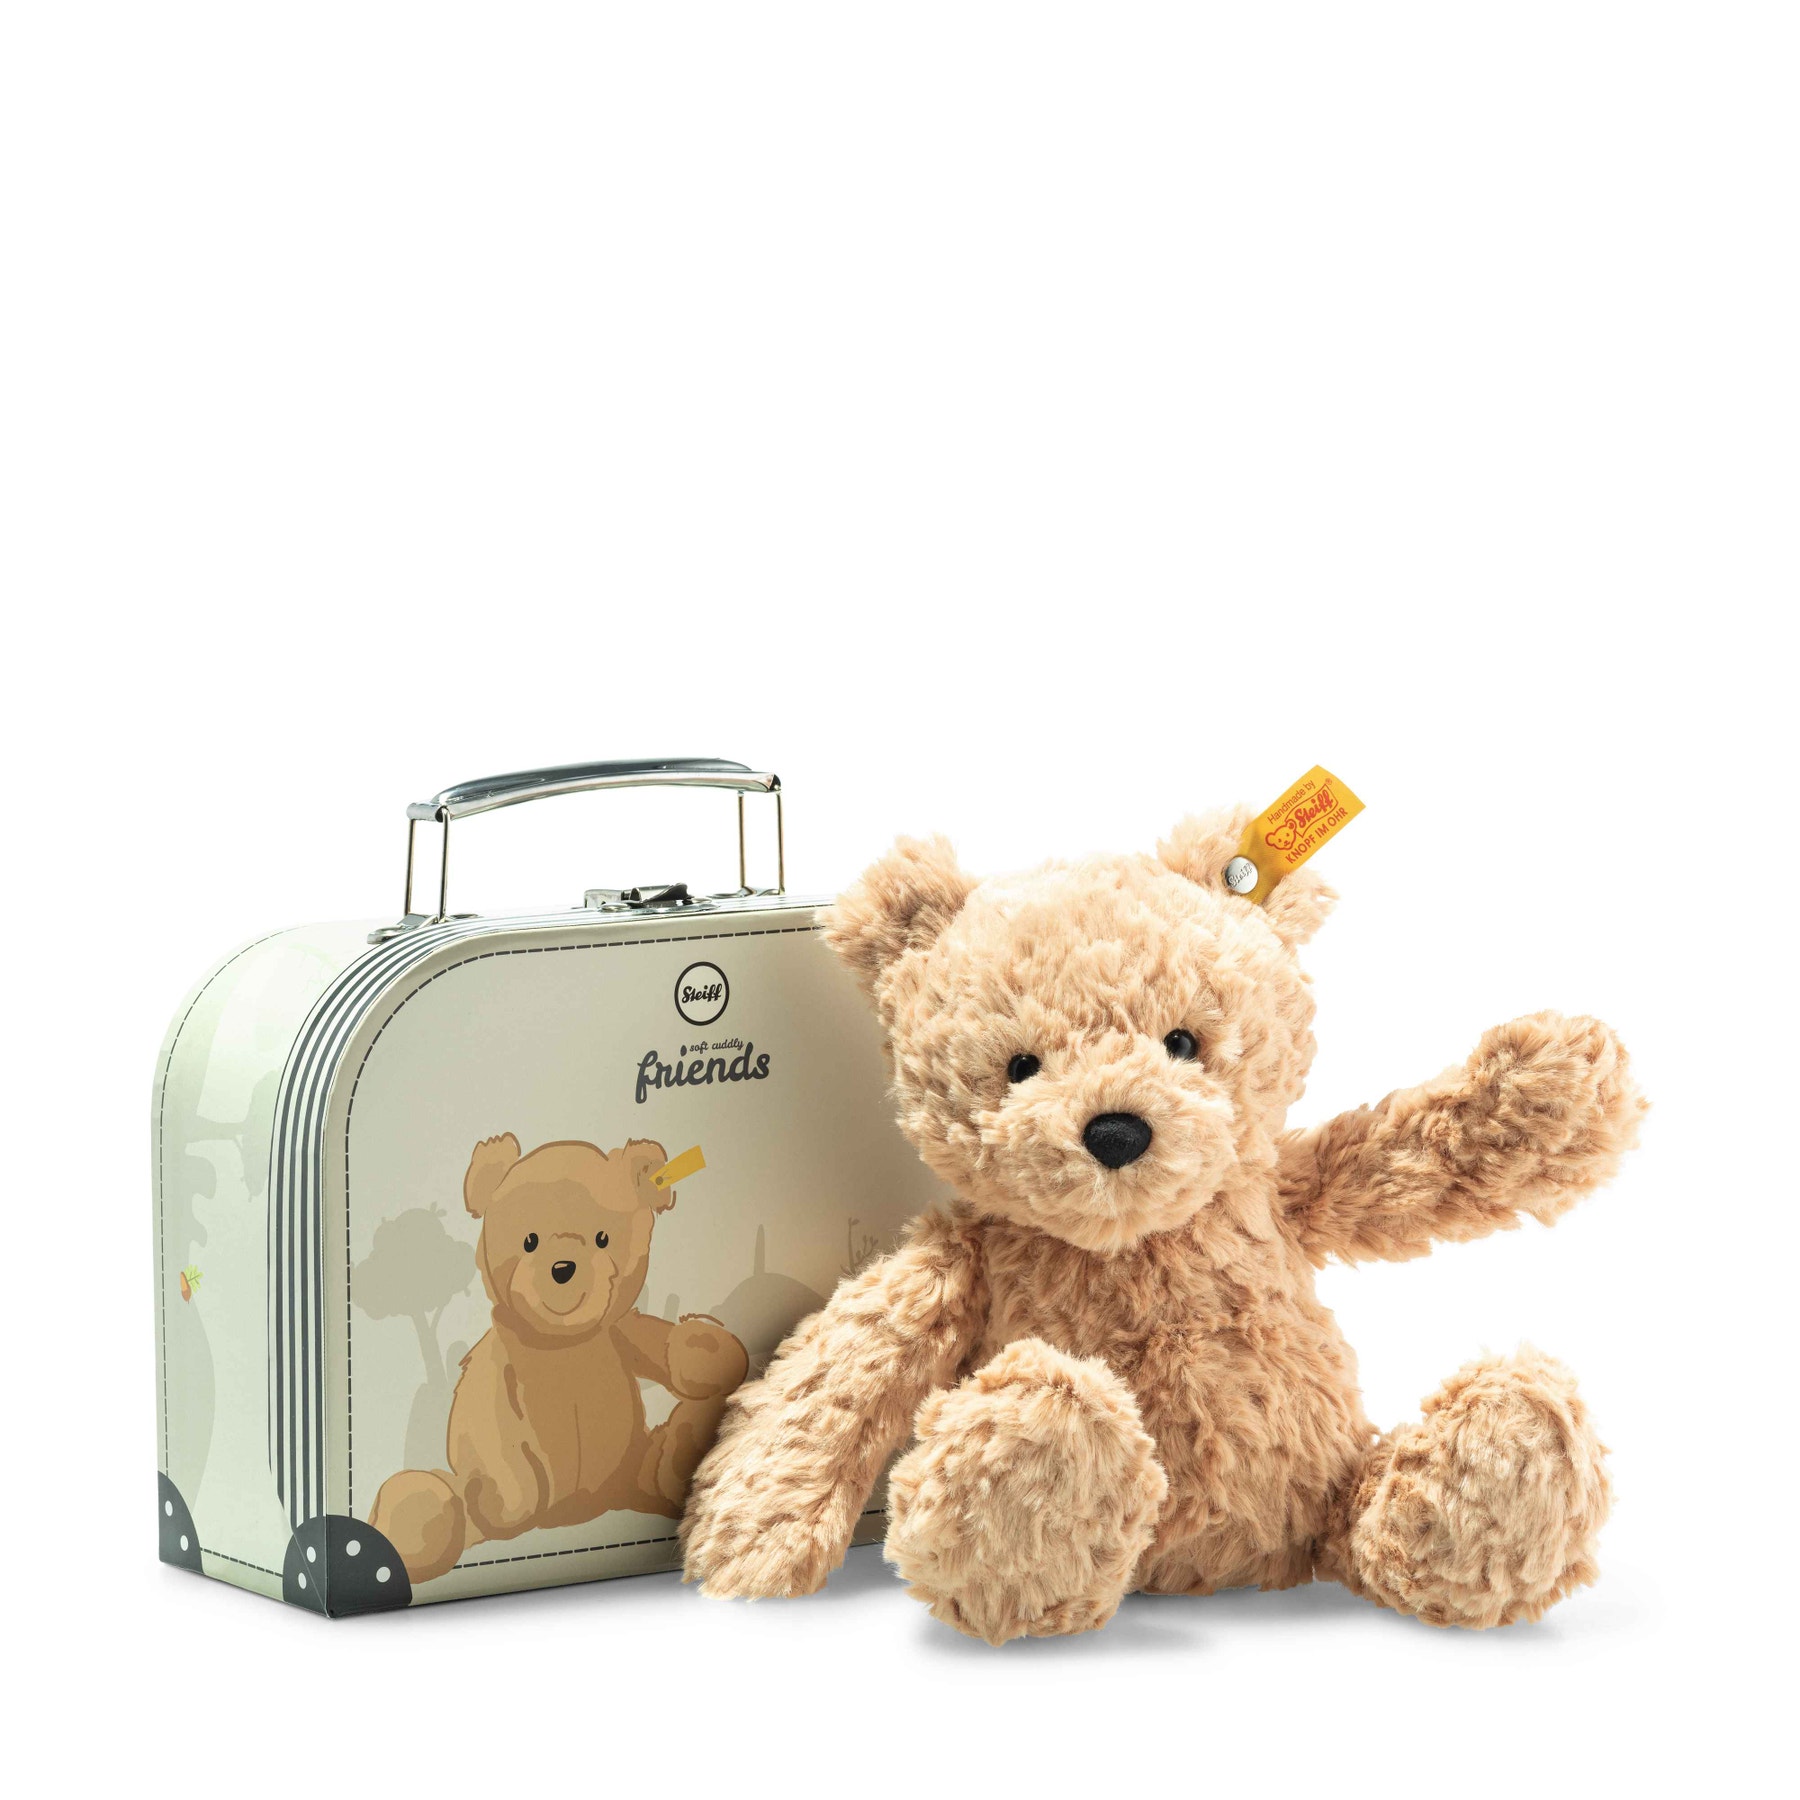 Soft Cuddly Friends Jimmy Teddy bear in suitcase